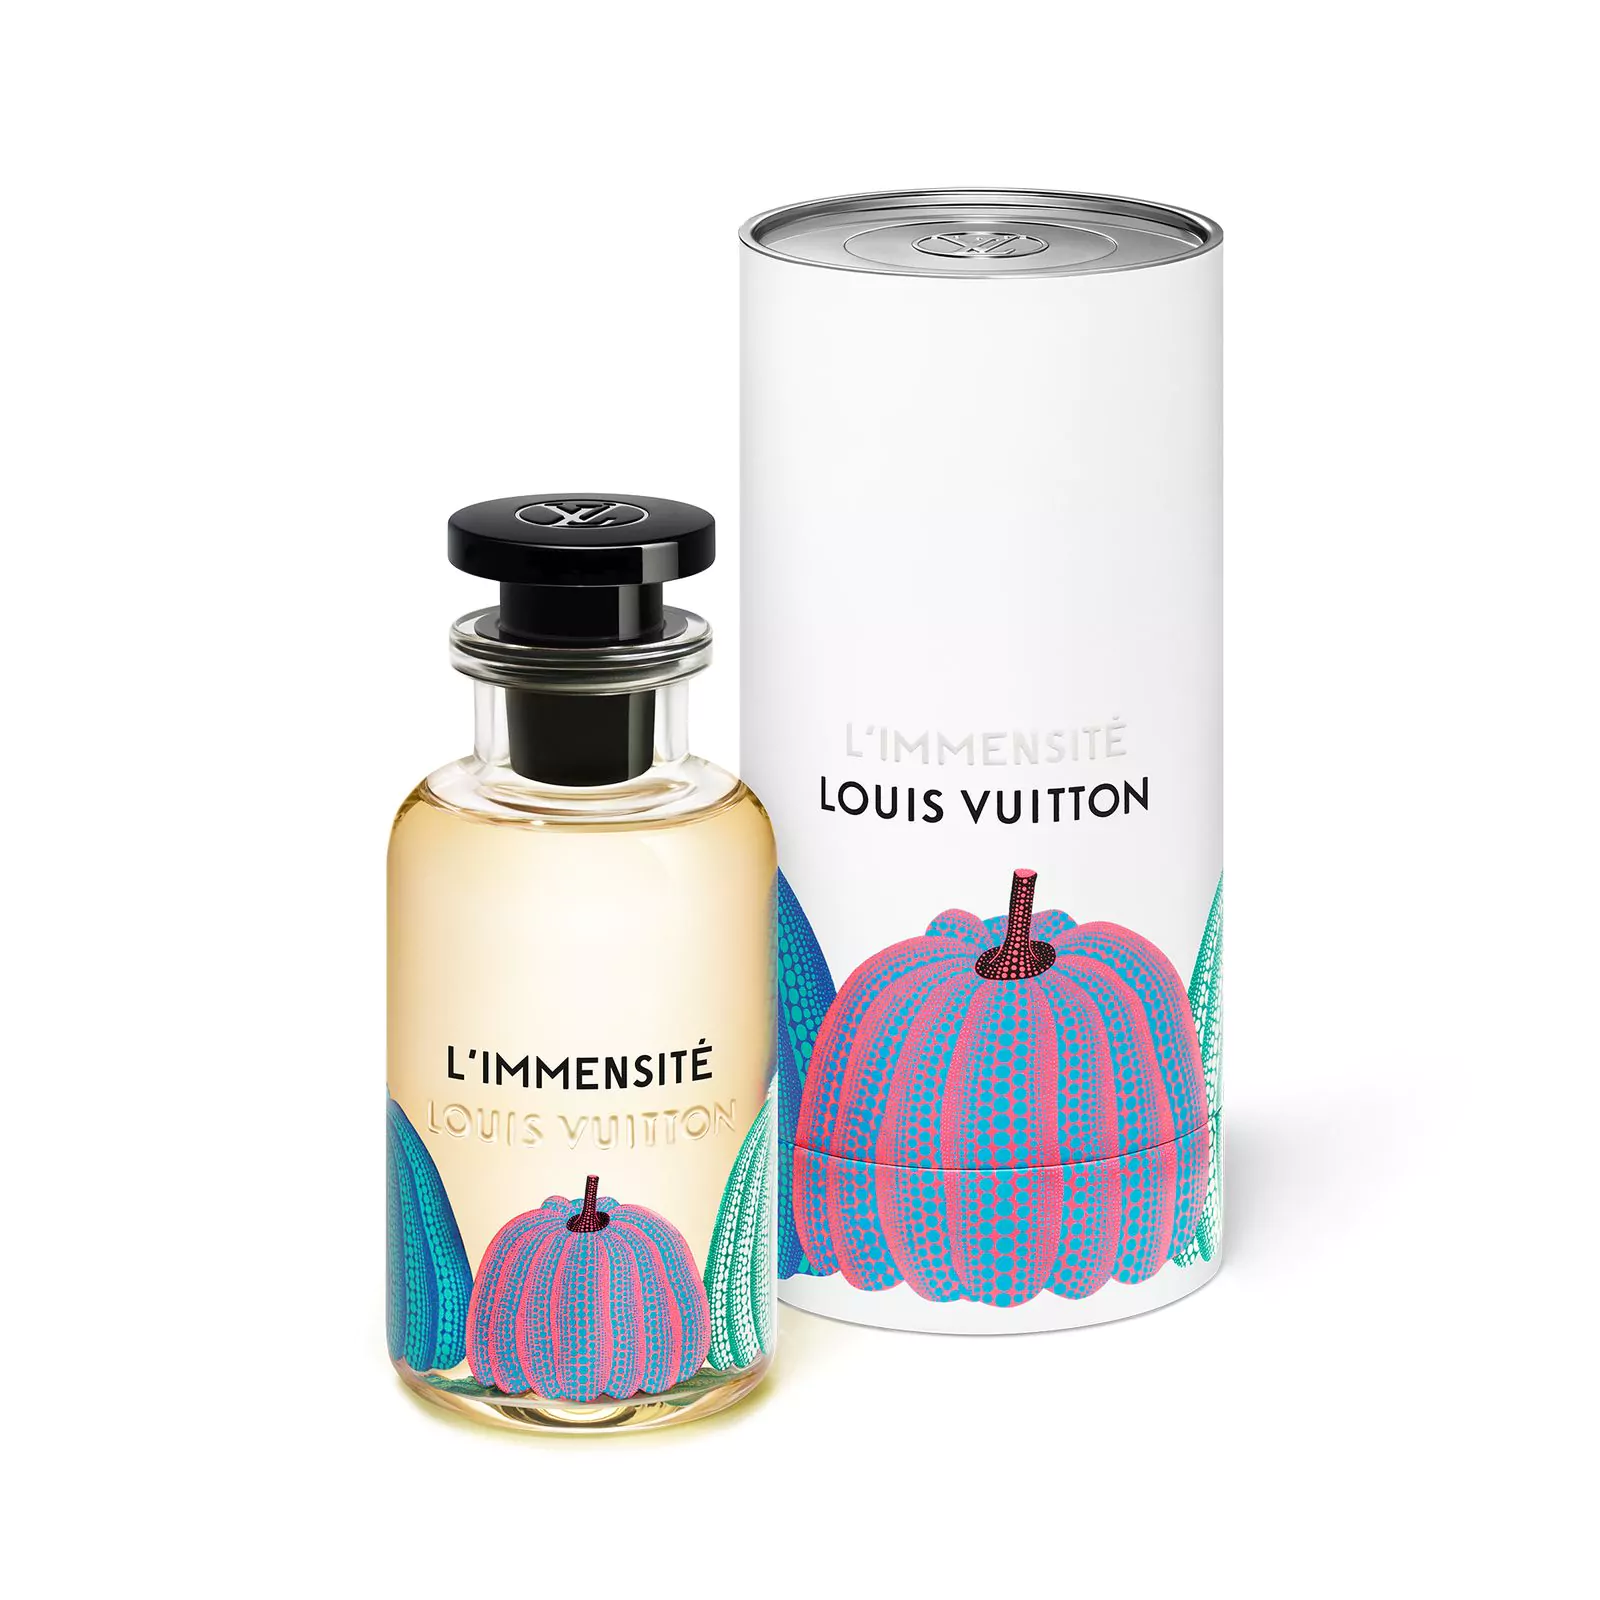 Аромат L’Immensite Louis Vuitton, фото 2